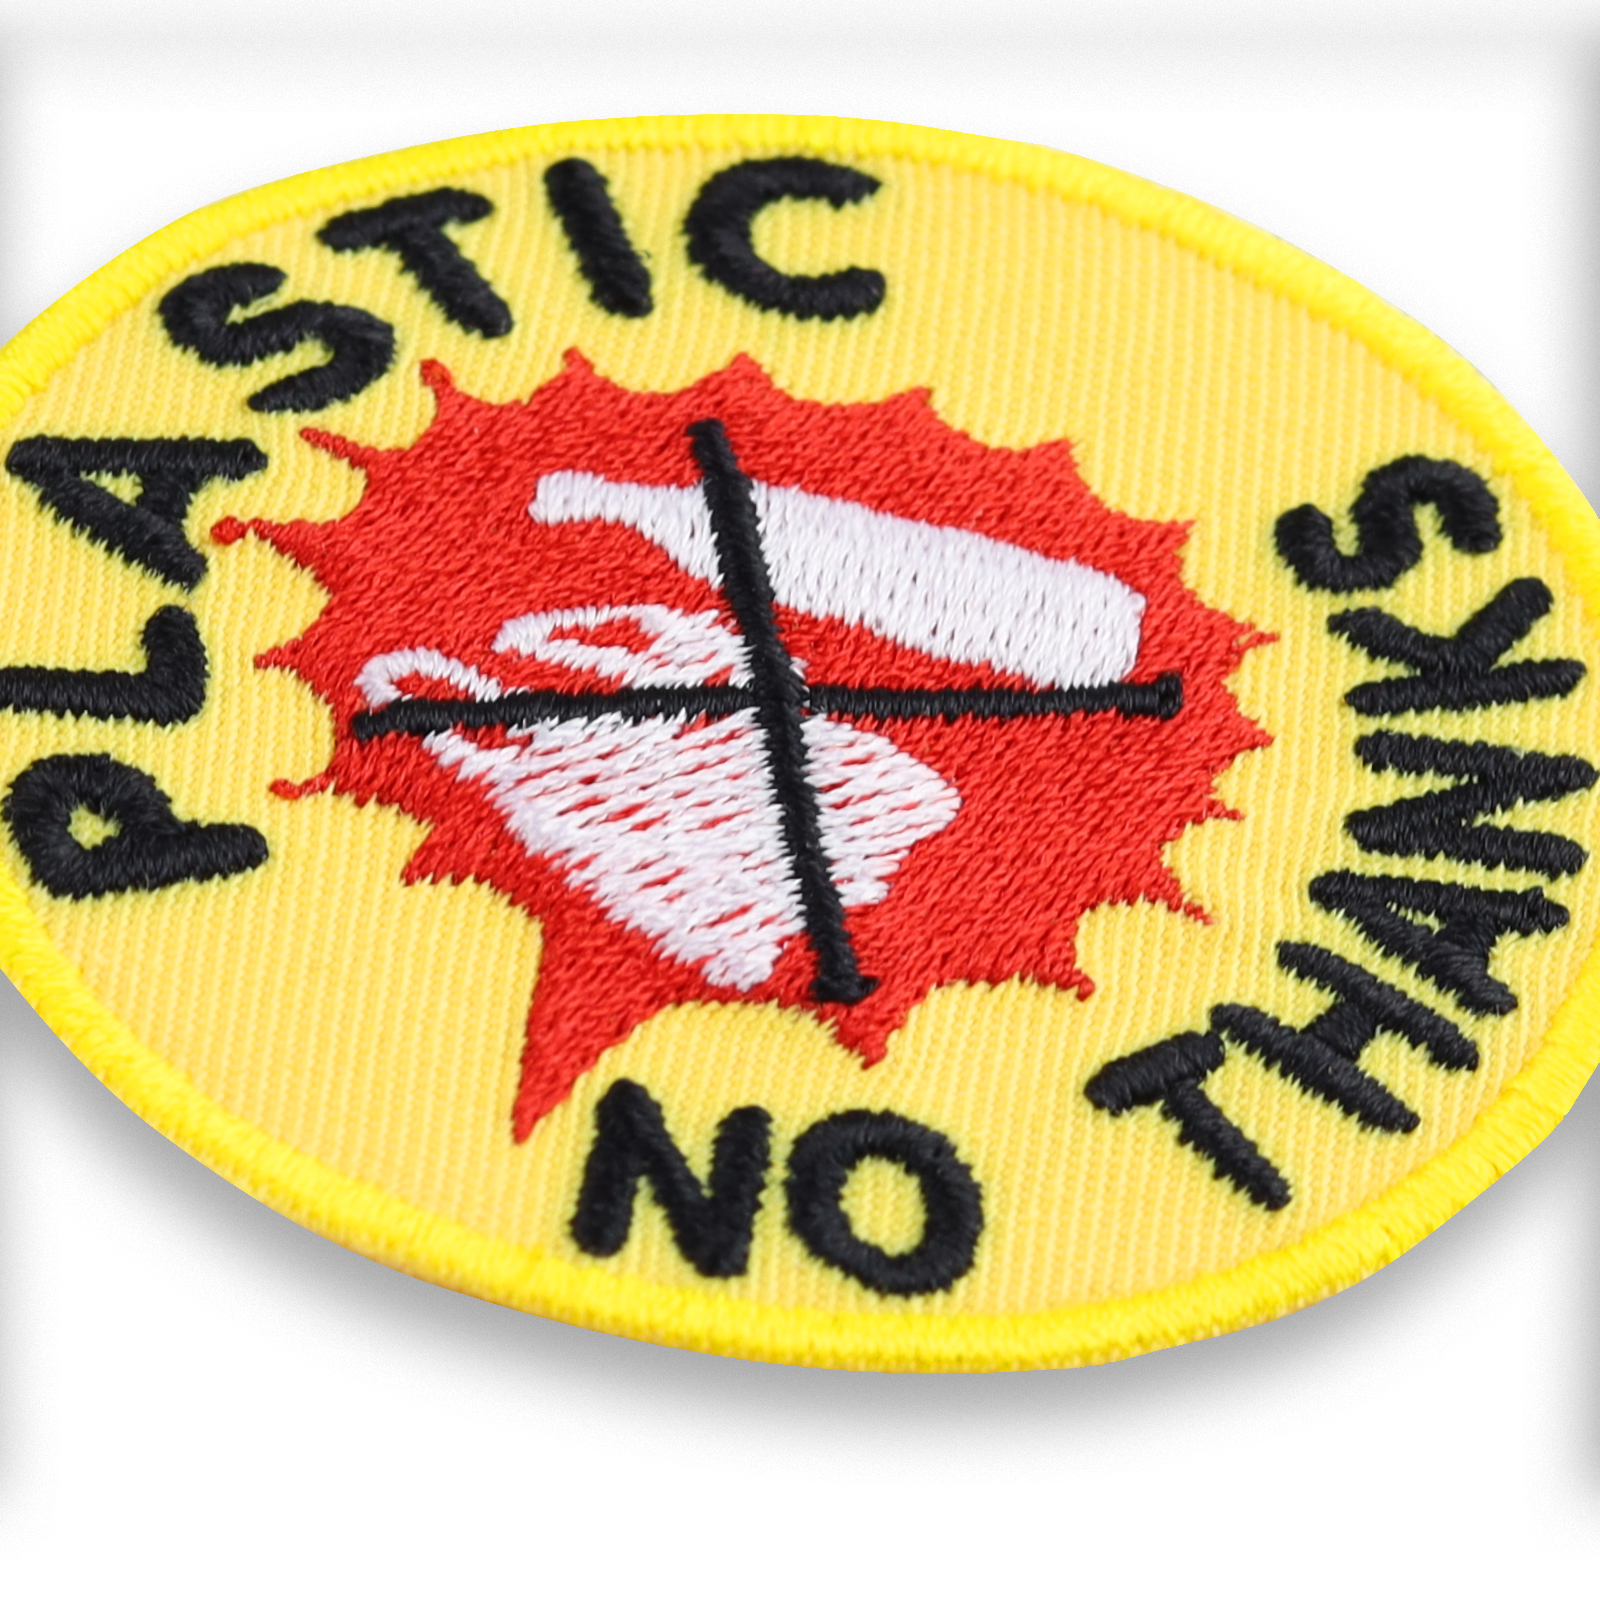 Plastic - No thanks - Patch